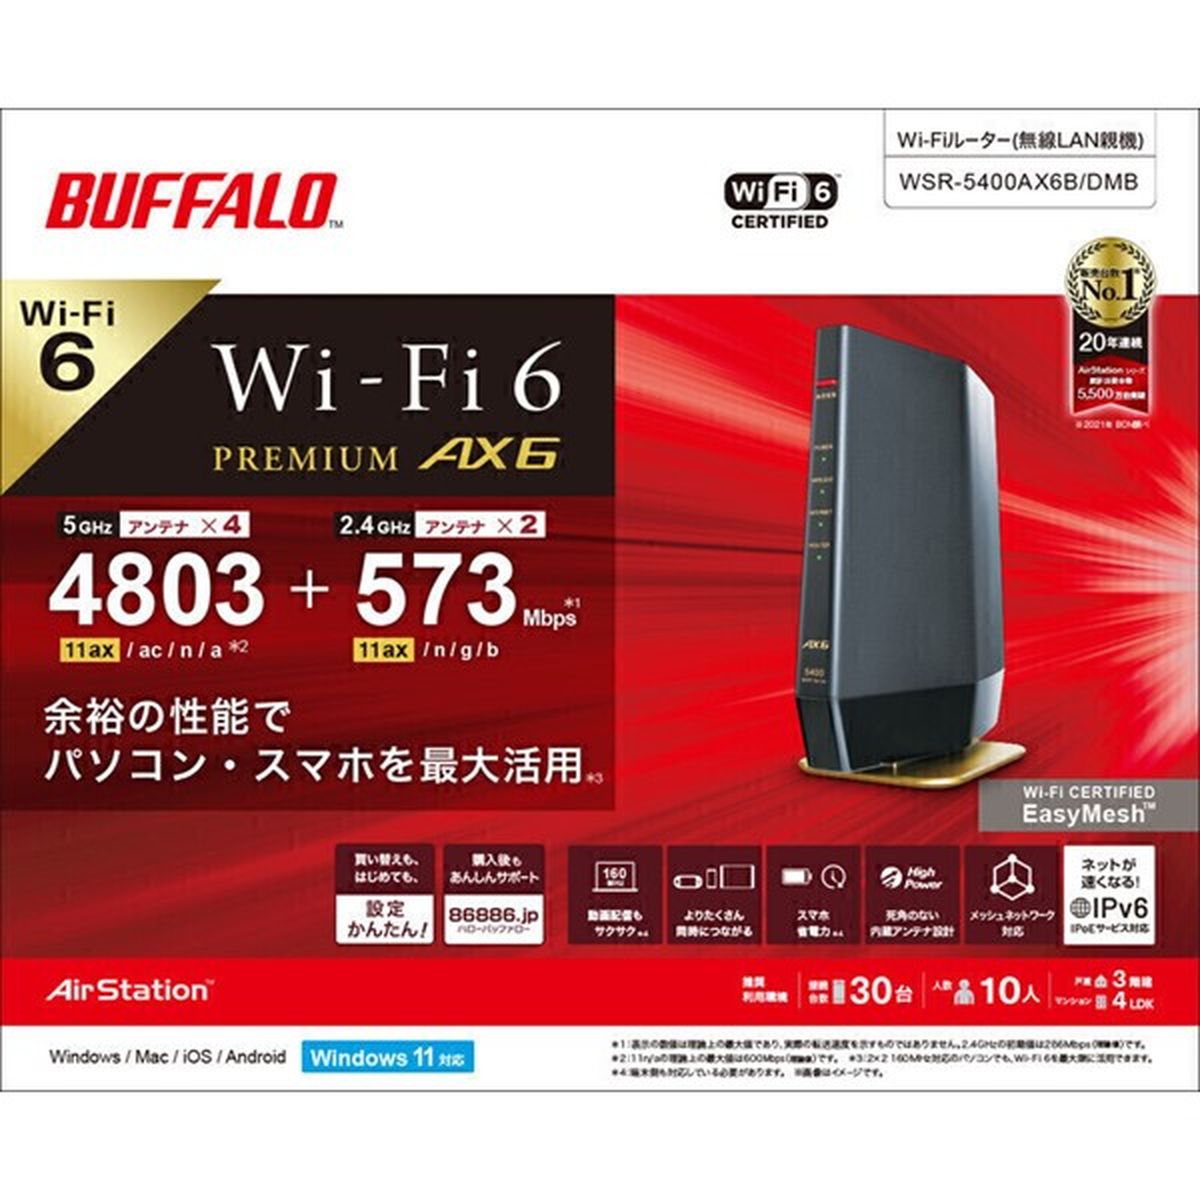 バッファロー BUFFALO Wi-Fi 無線LAN親機 11ax ac n a g b 4803 573Mbps WSR-5400AX